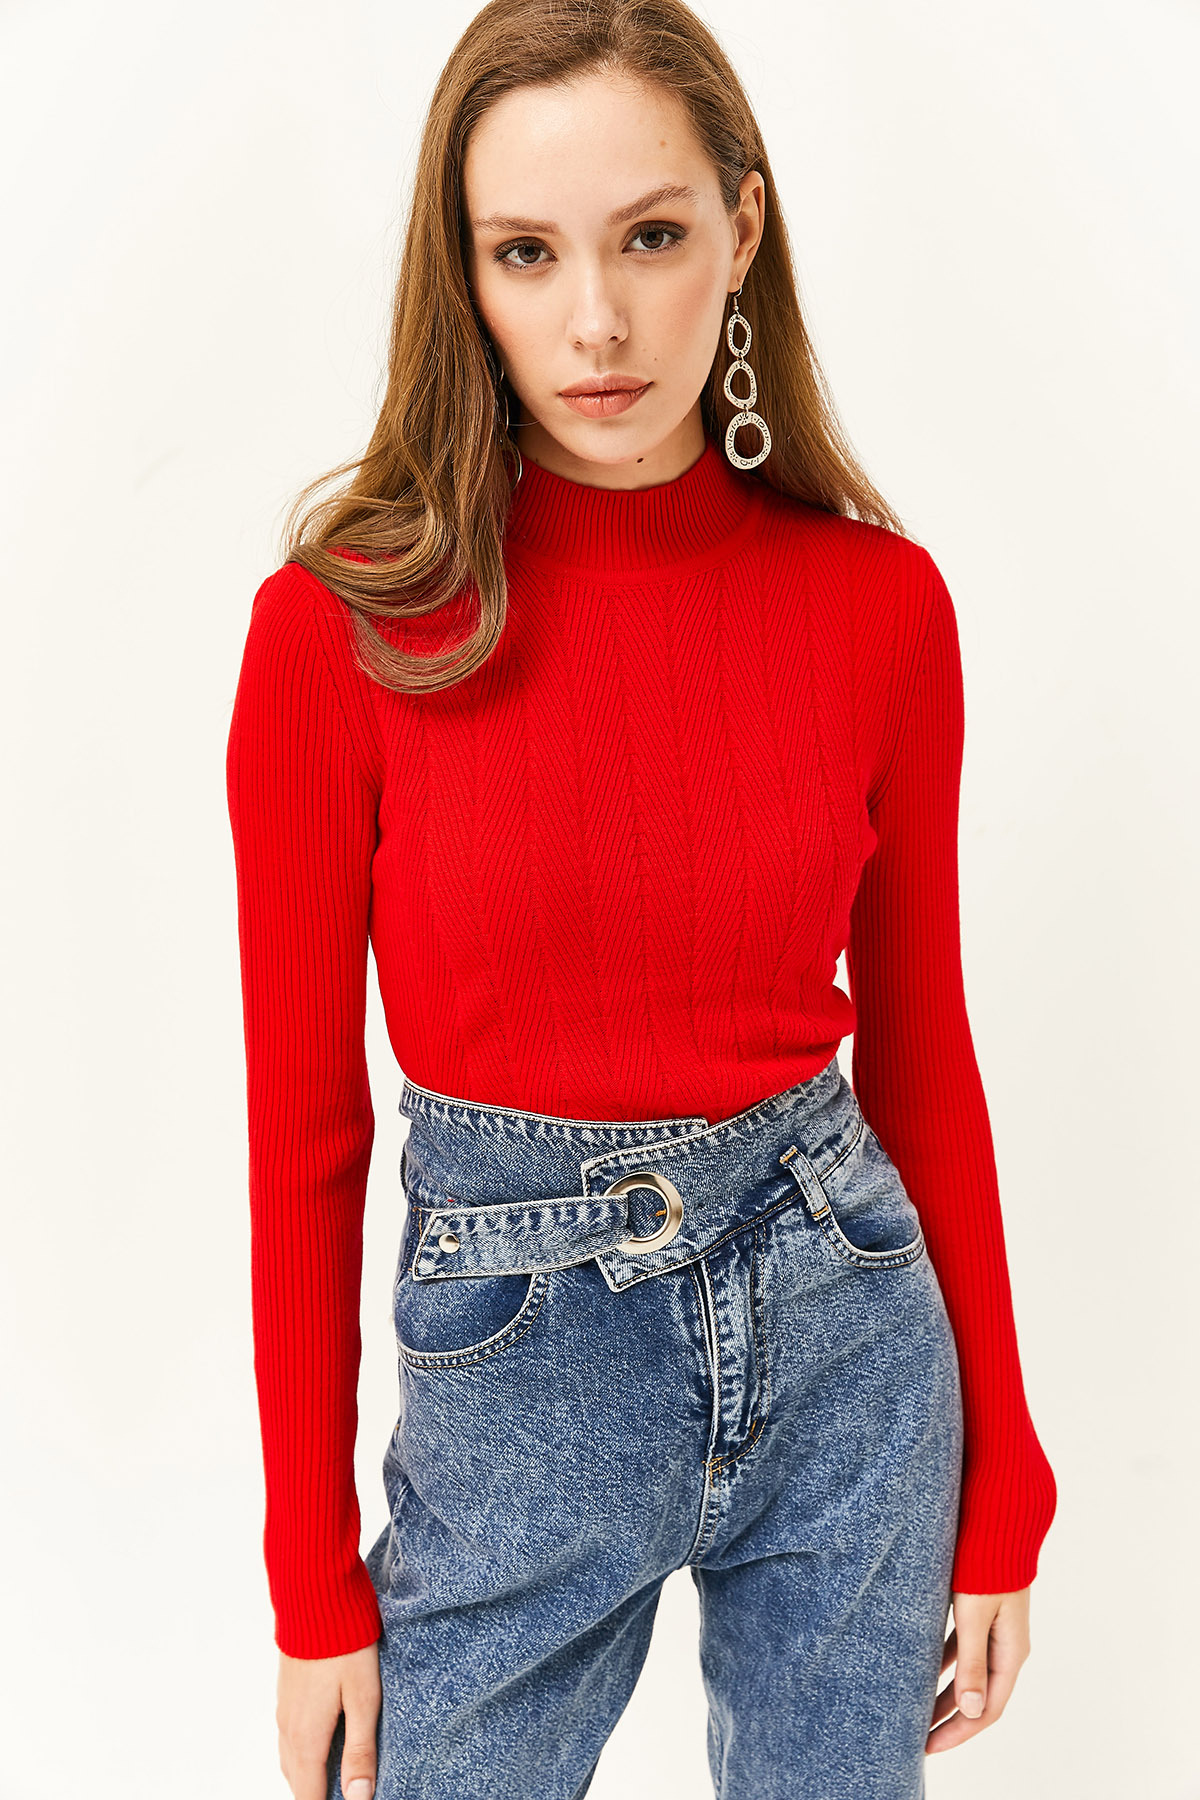 Levně Olalook Women's Red Half Turtleneck Zigzag Textured Soft Knitwear Sweater